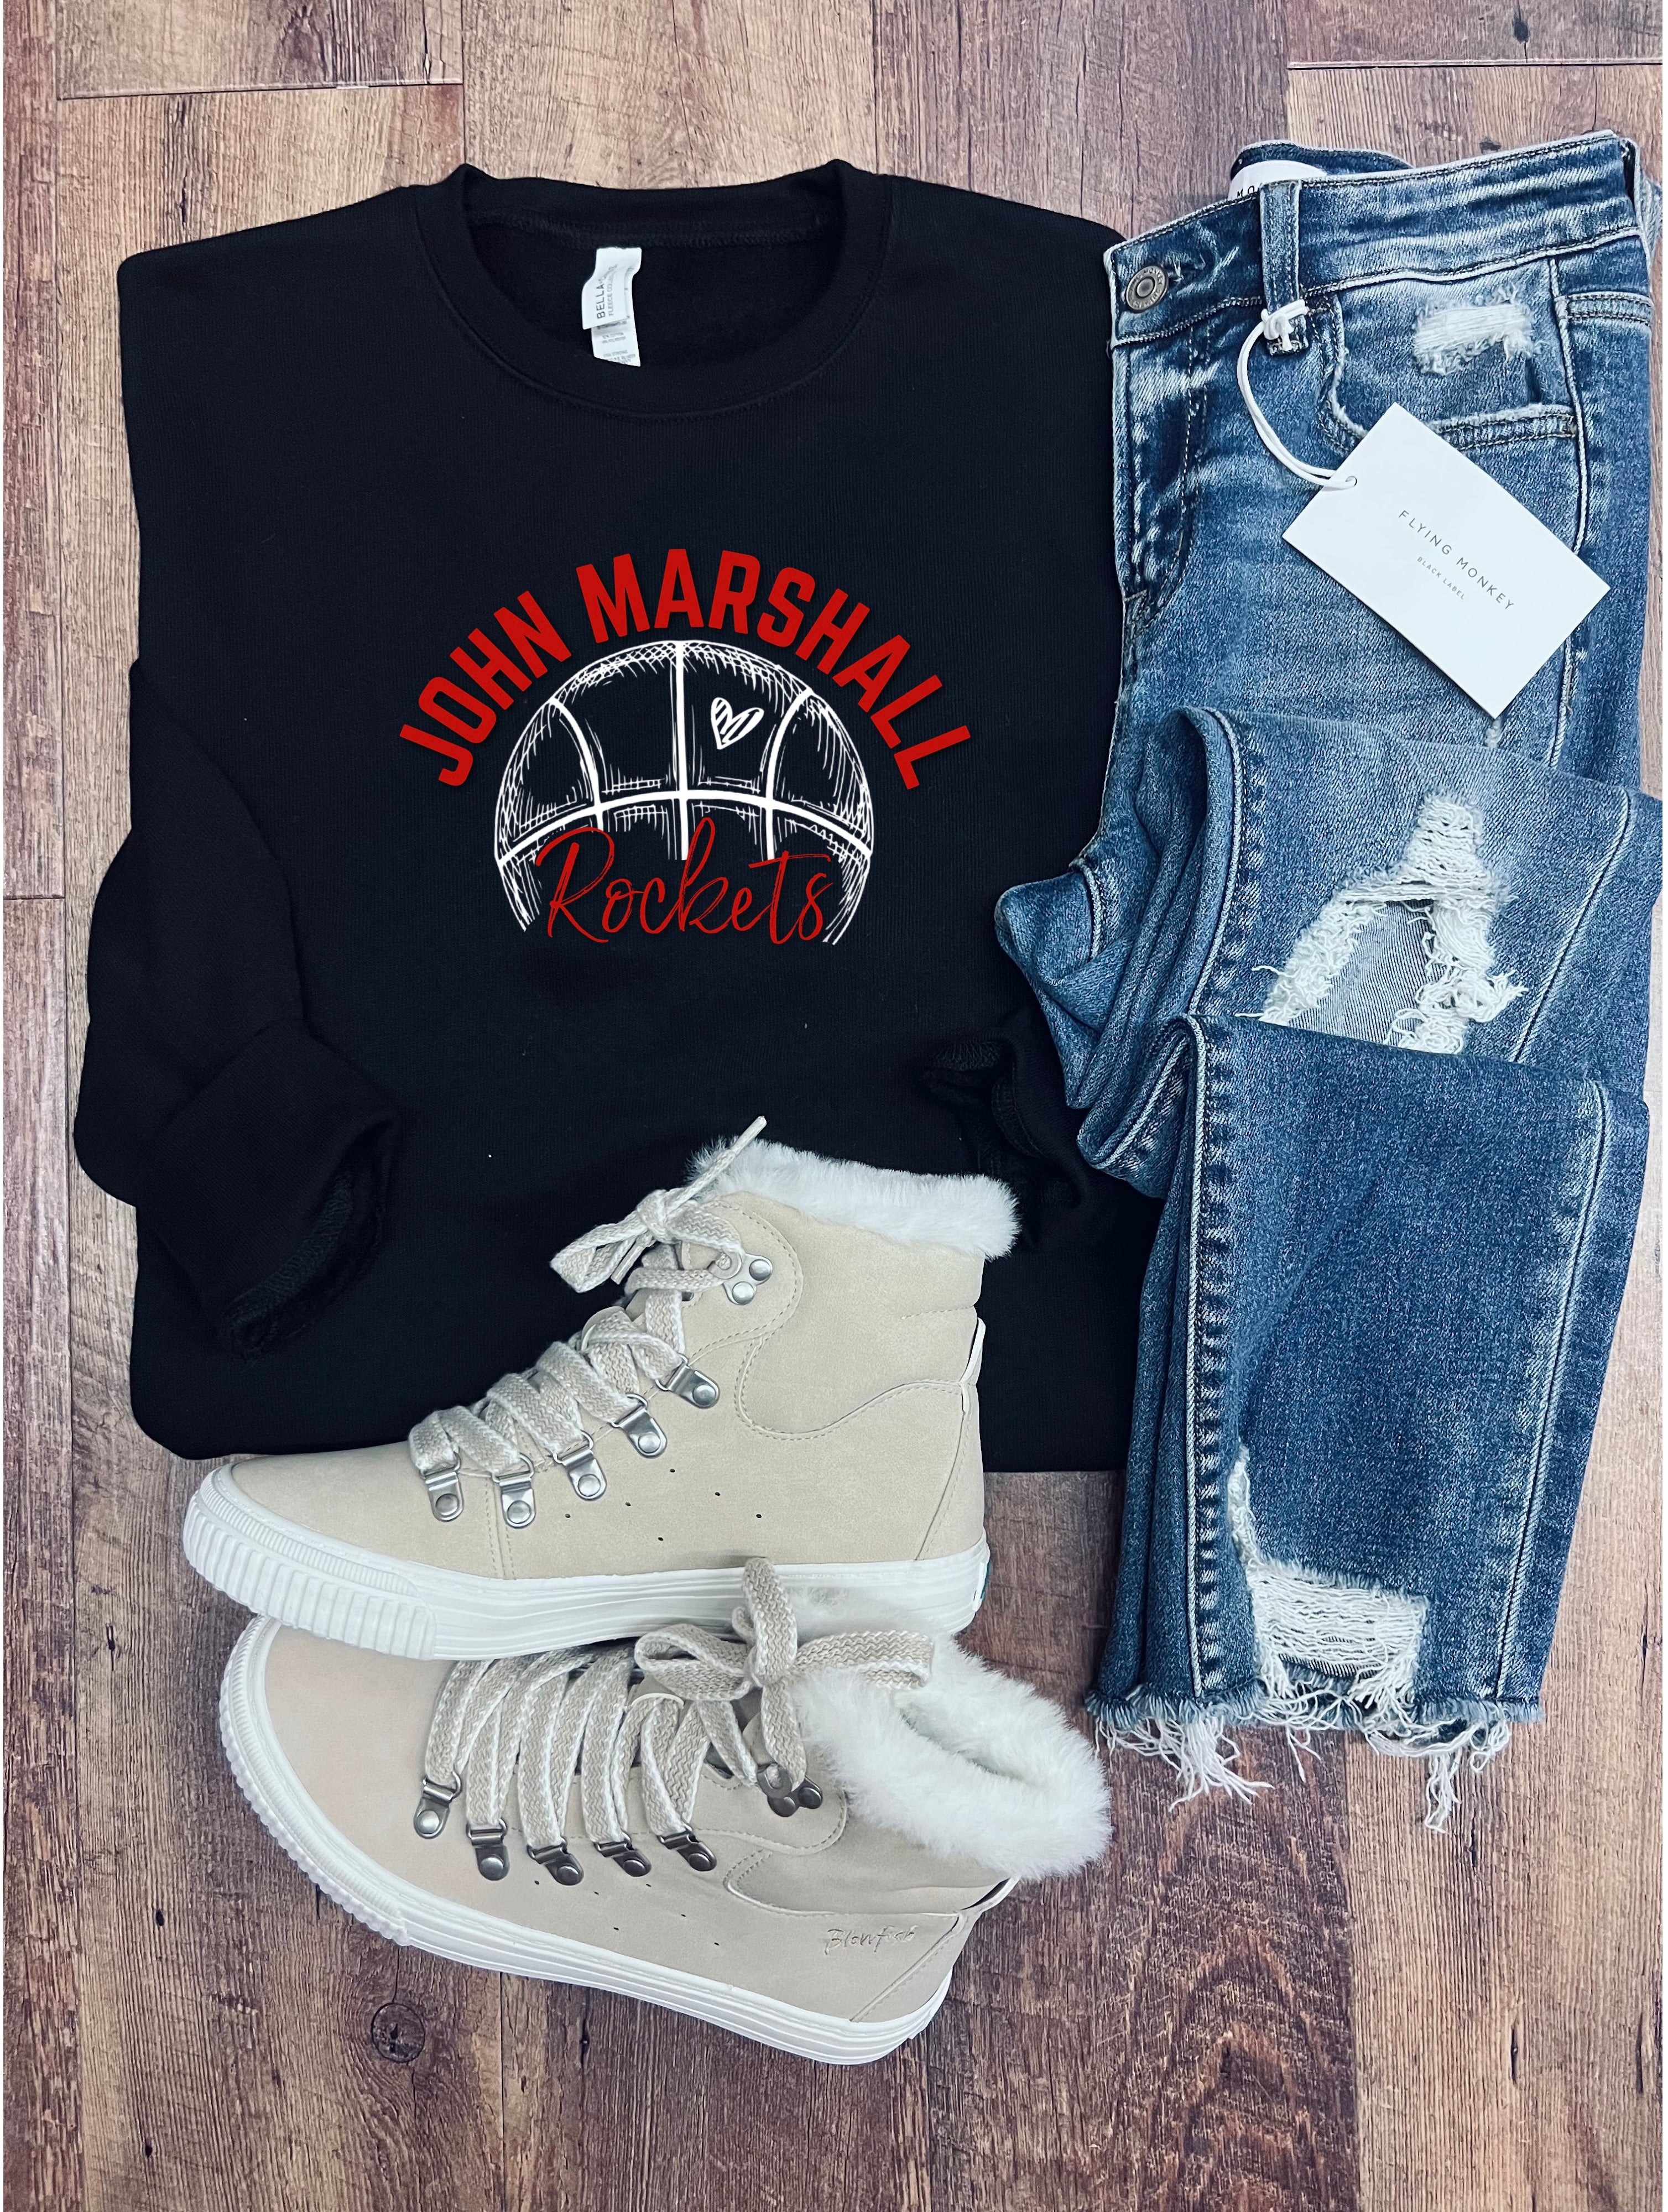 John Marshall Rockets Basketball Tee/Crew/Hoodie